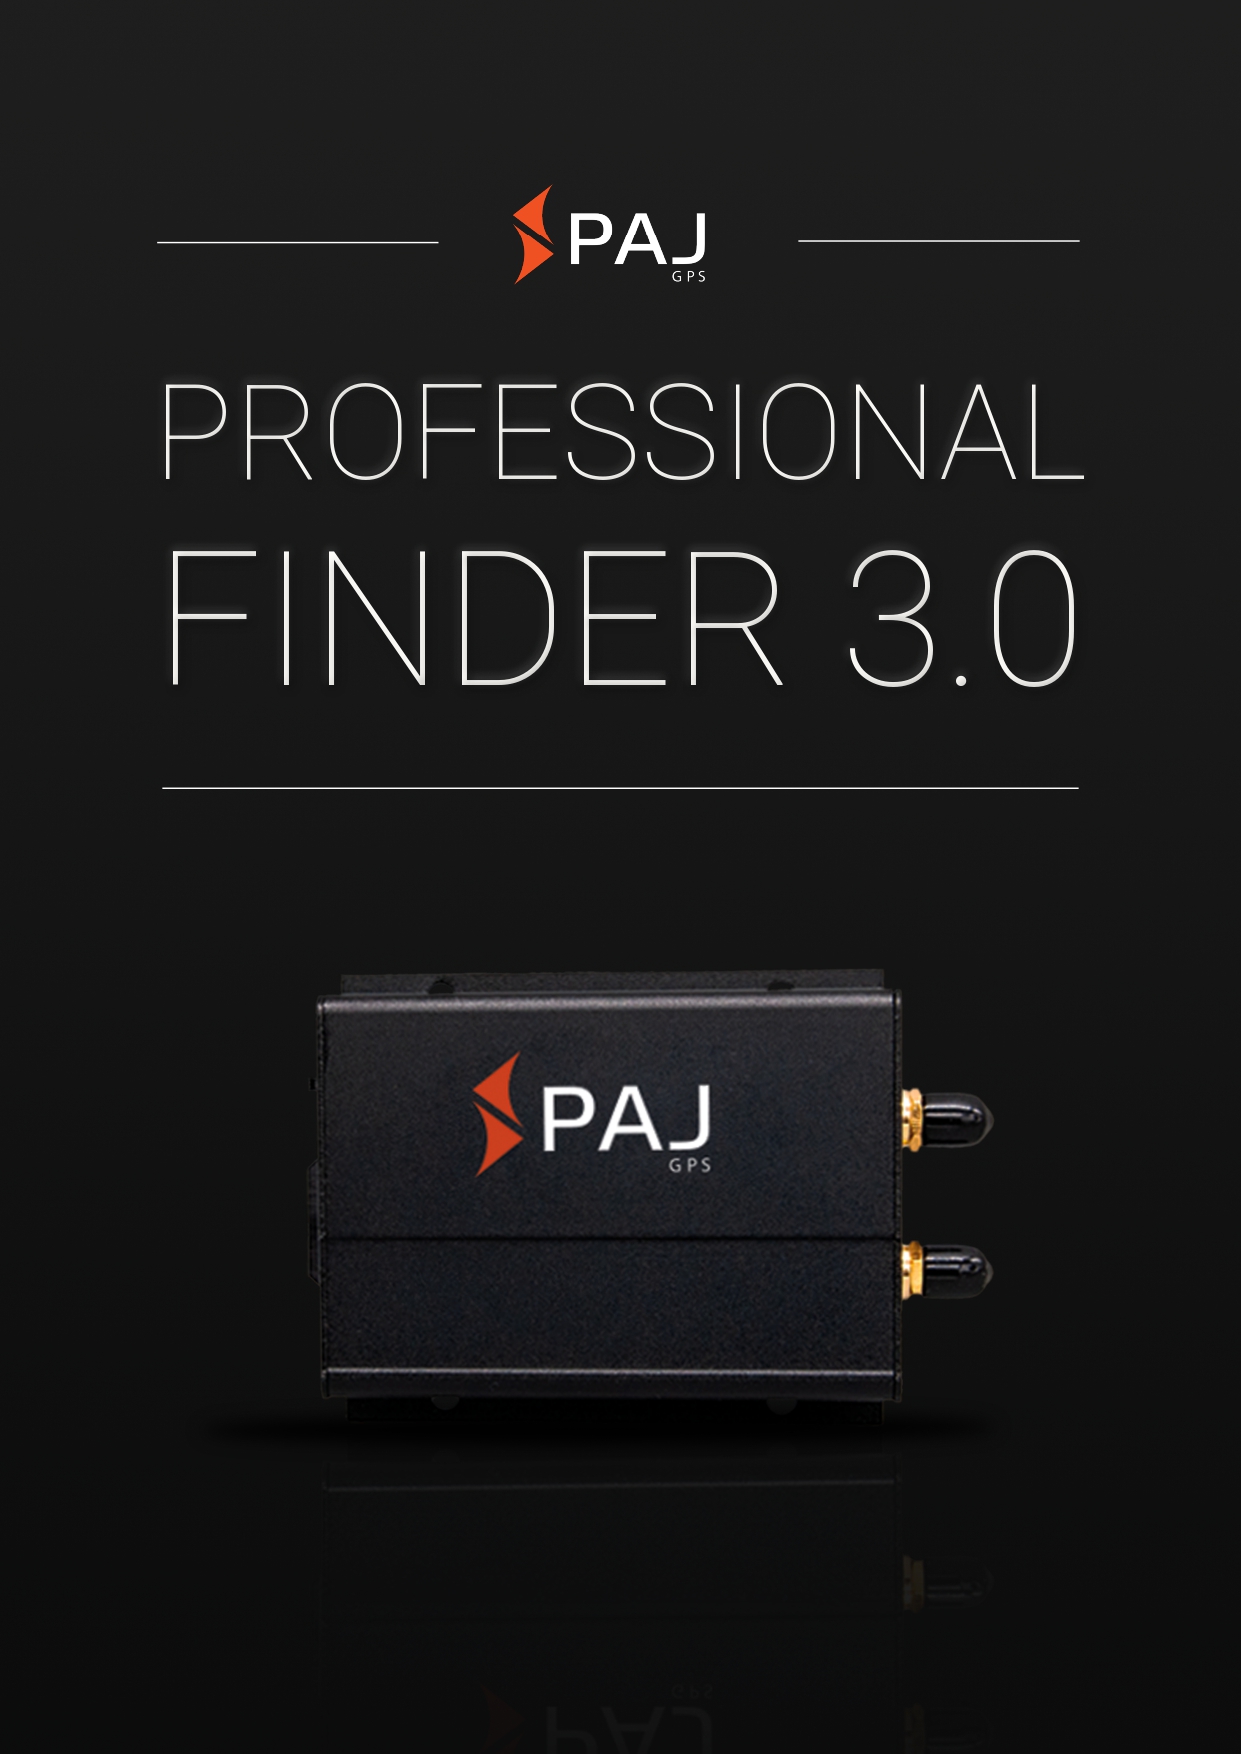 Thumbnail manual PROFESSIONAL Finder 3.0 GPS Tracker from PAJ